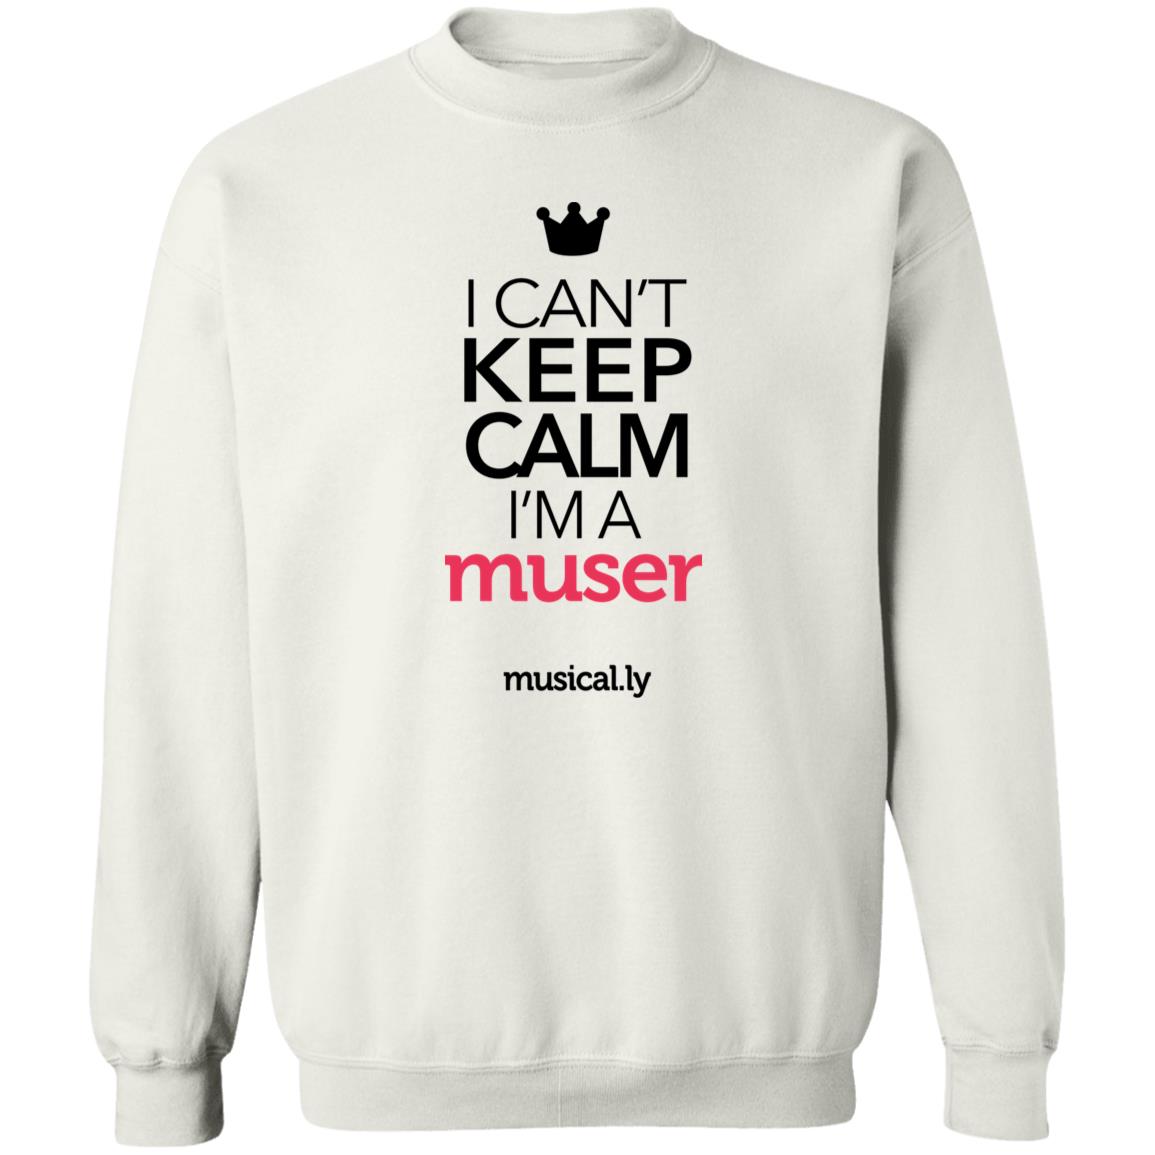 I Can’t Keep Calm I’m A Muser Musically Shirt 1